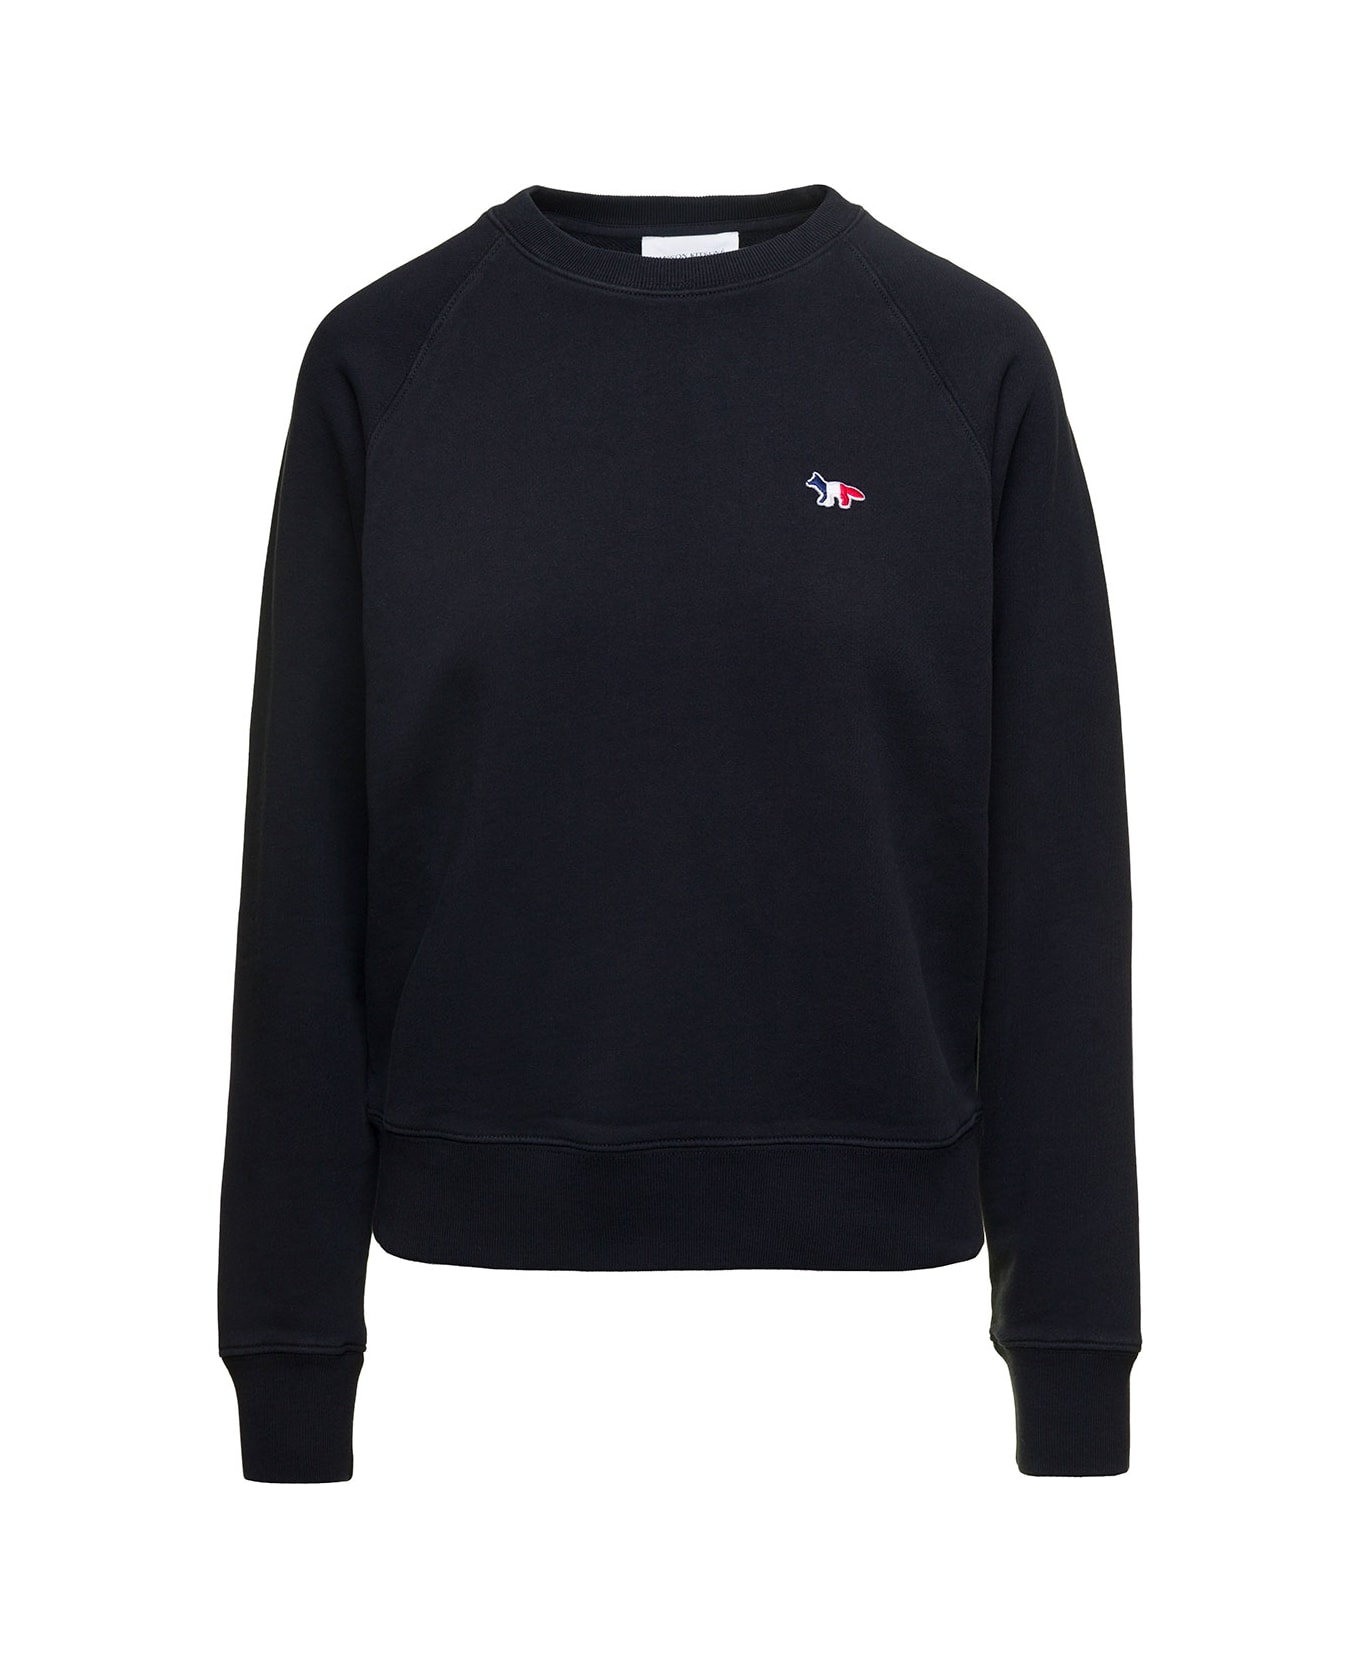 Maison Kitsuné Palais Royal Crewneck Sweatshirt With Logo In Black Cotton Woman - Black